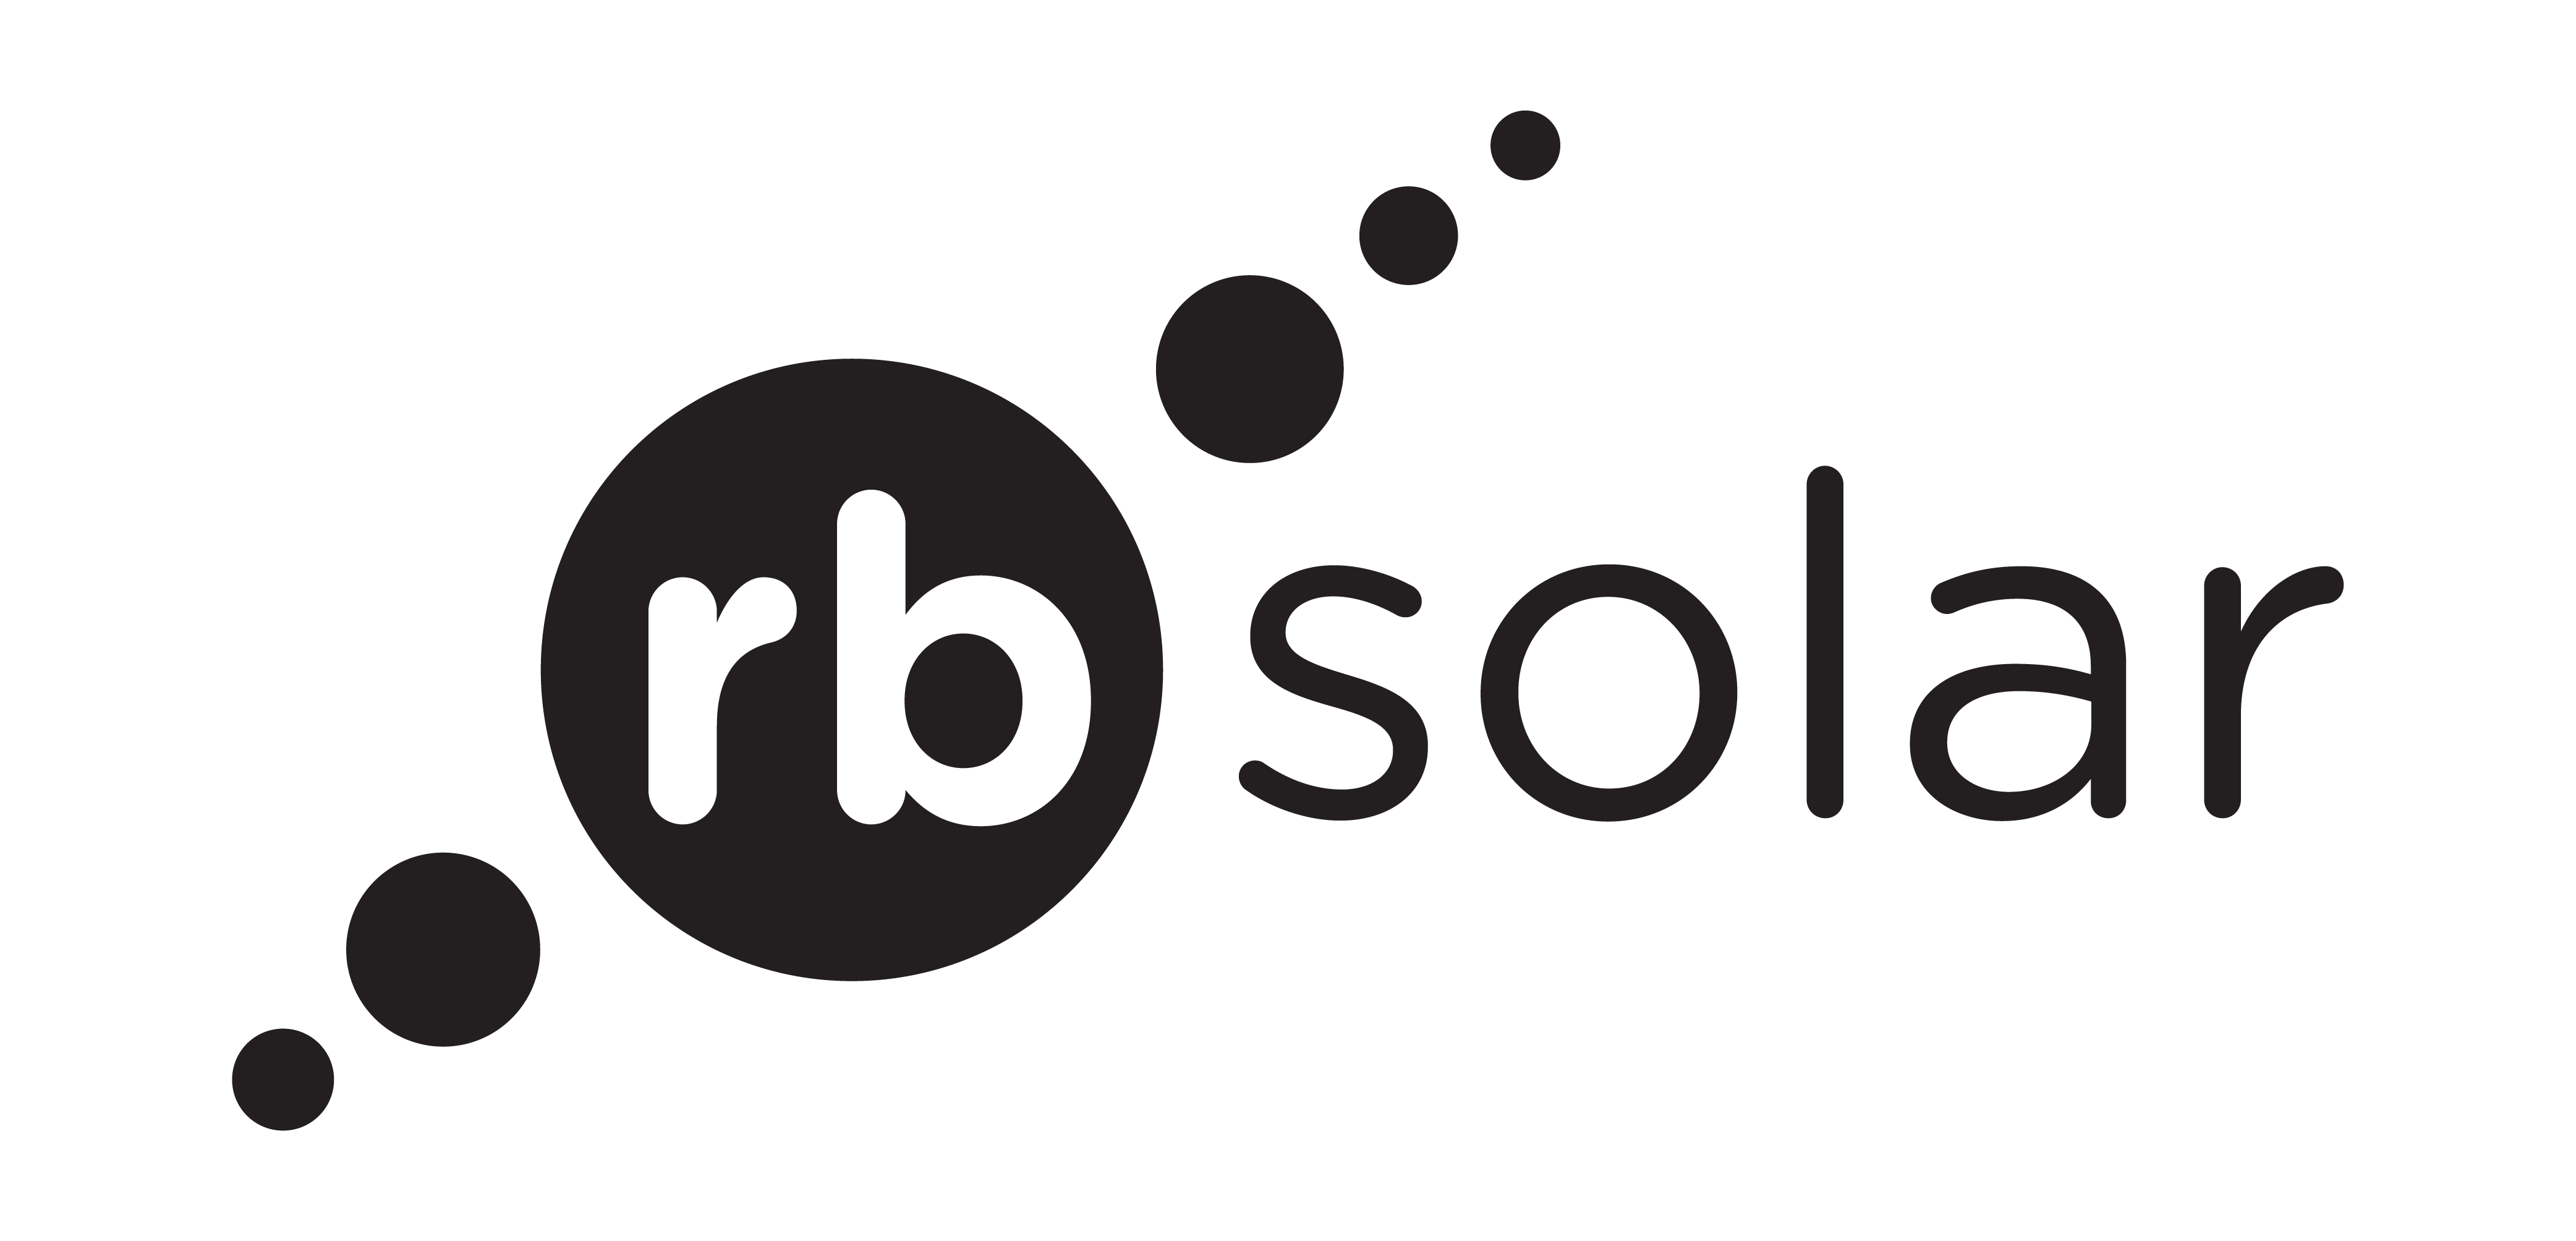 RB Solar